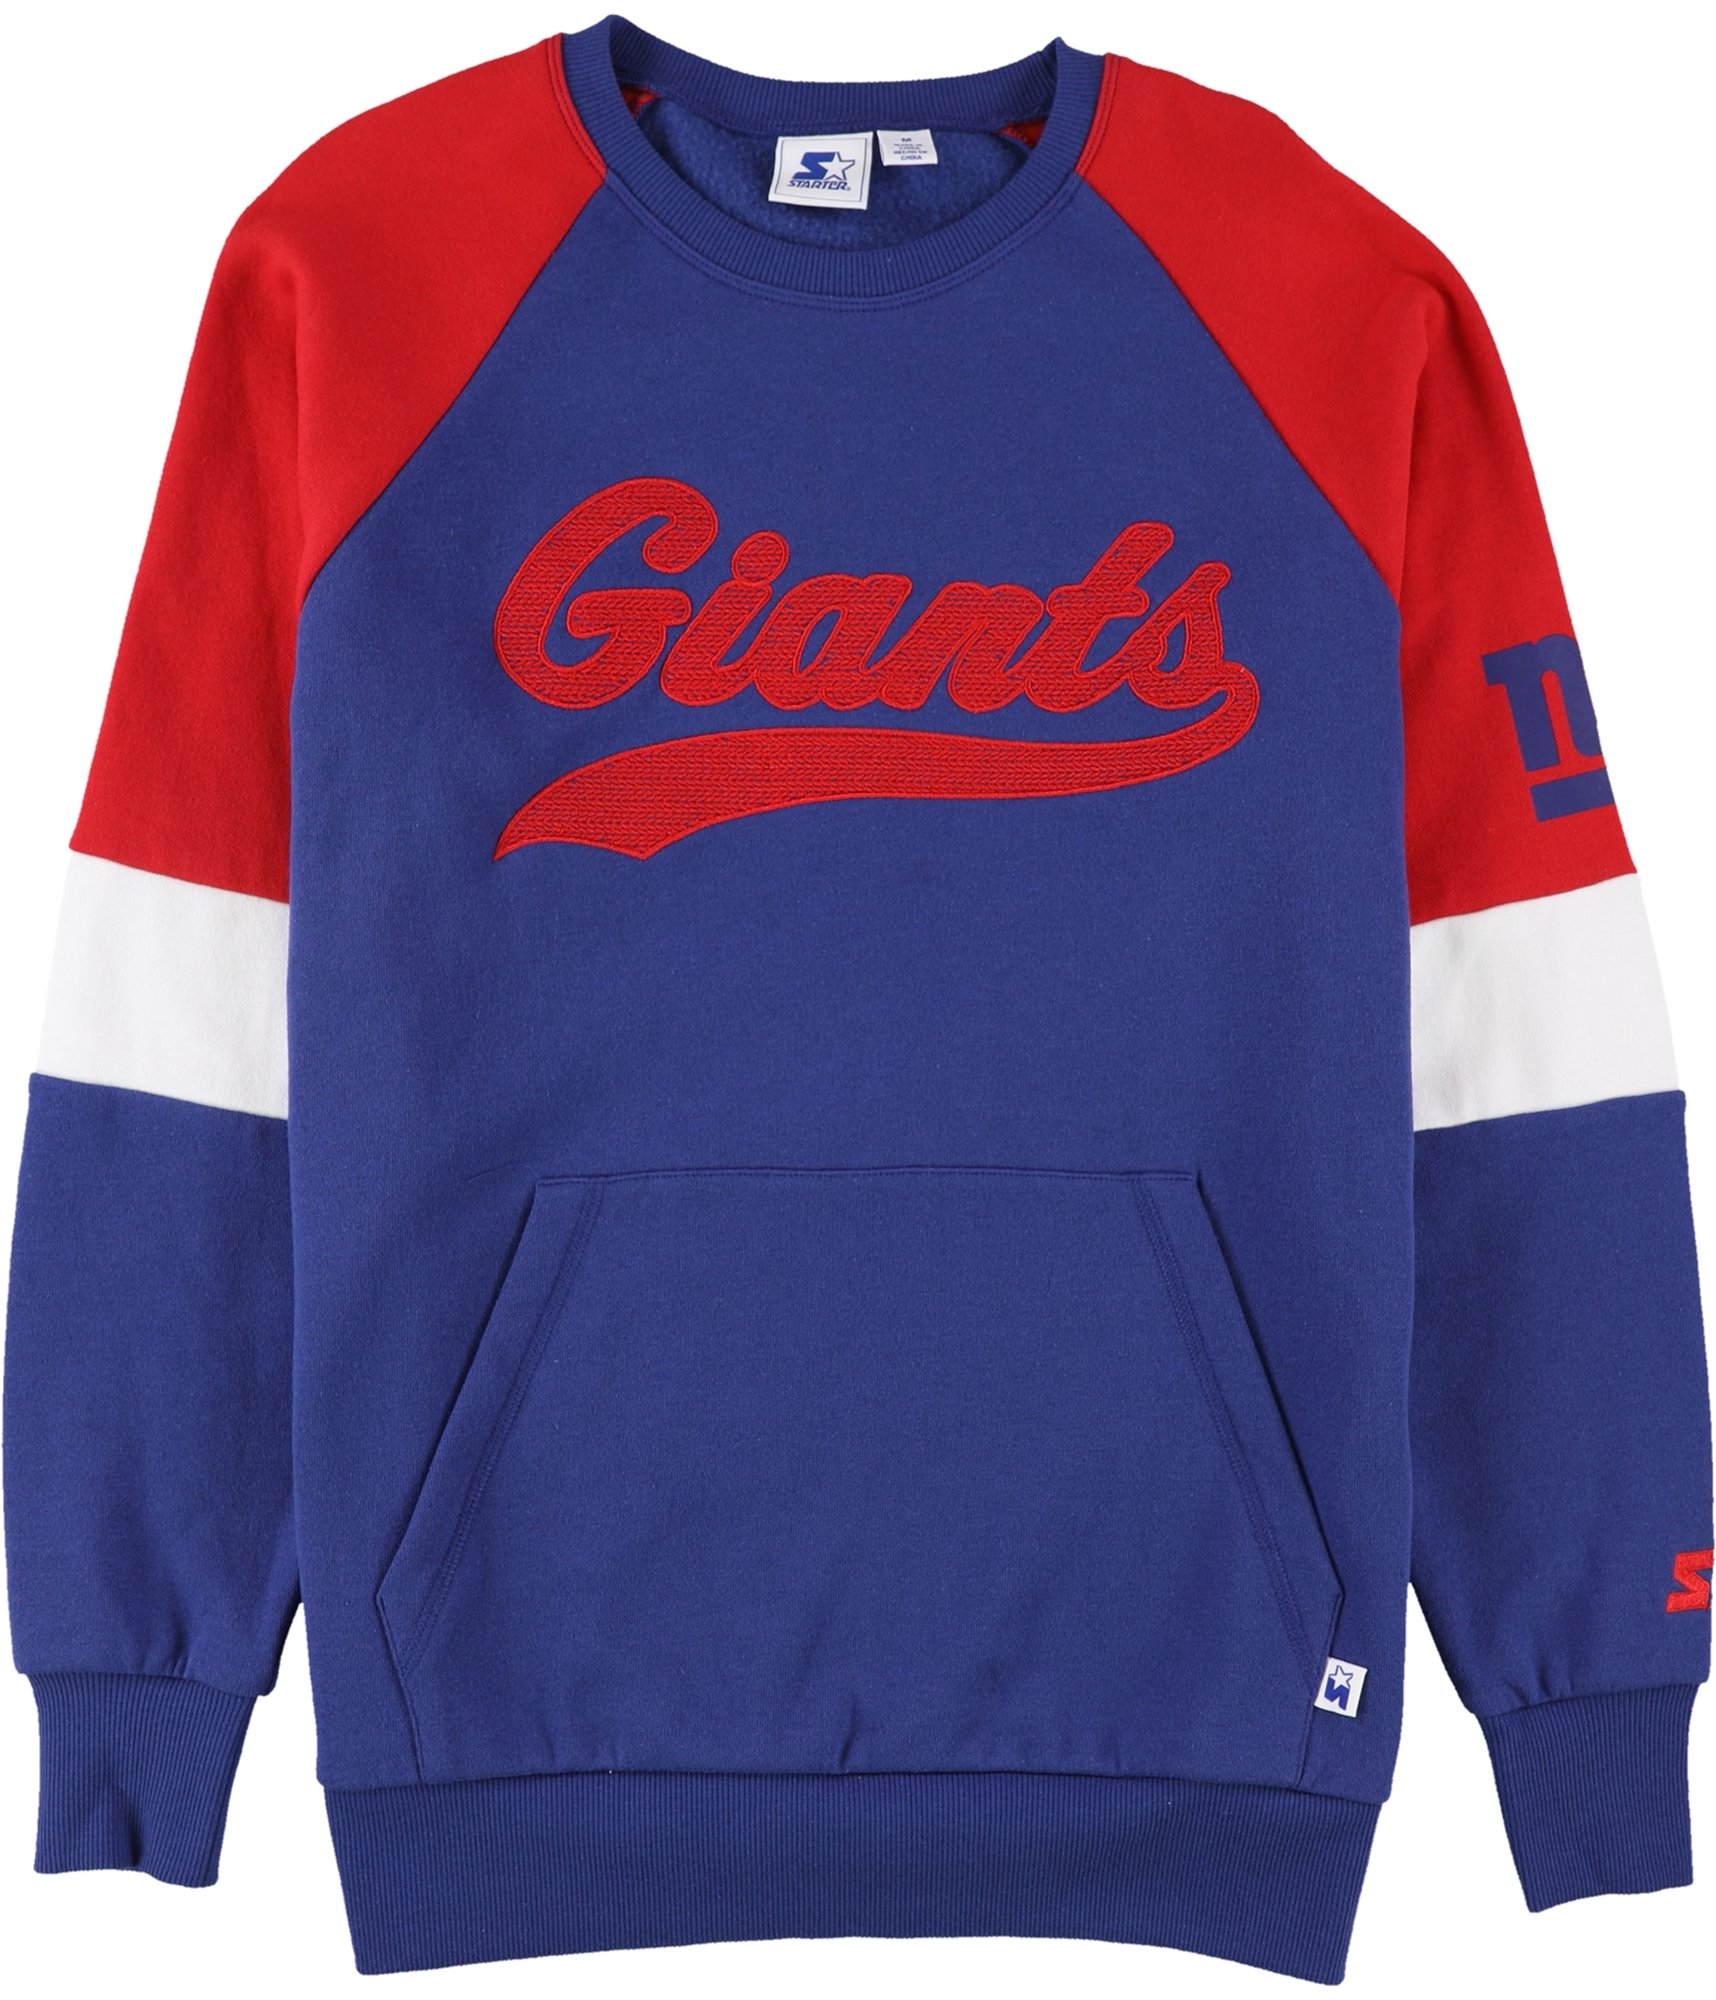 Buy a Womens STARTER New York Giants Sweatshirt Online